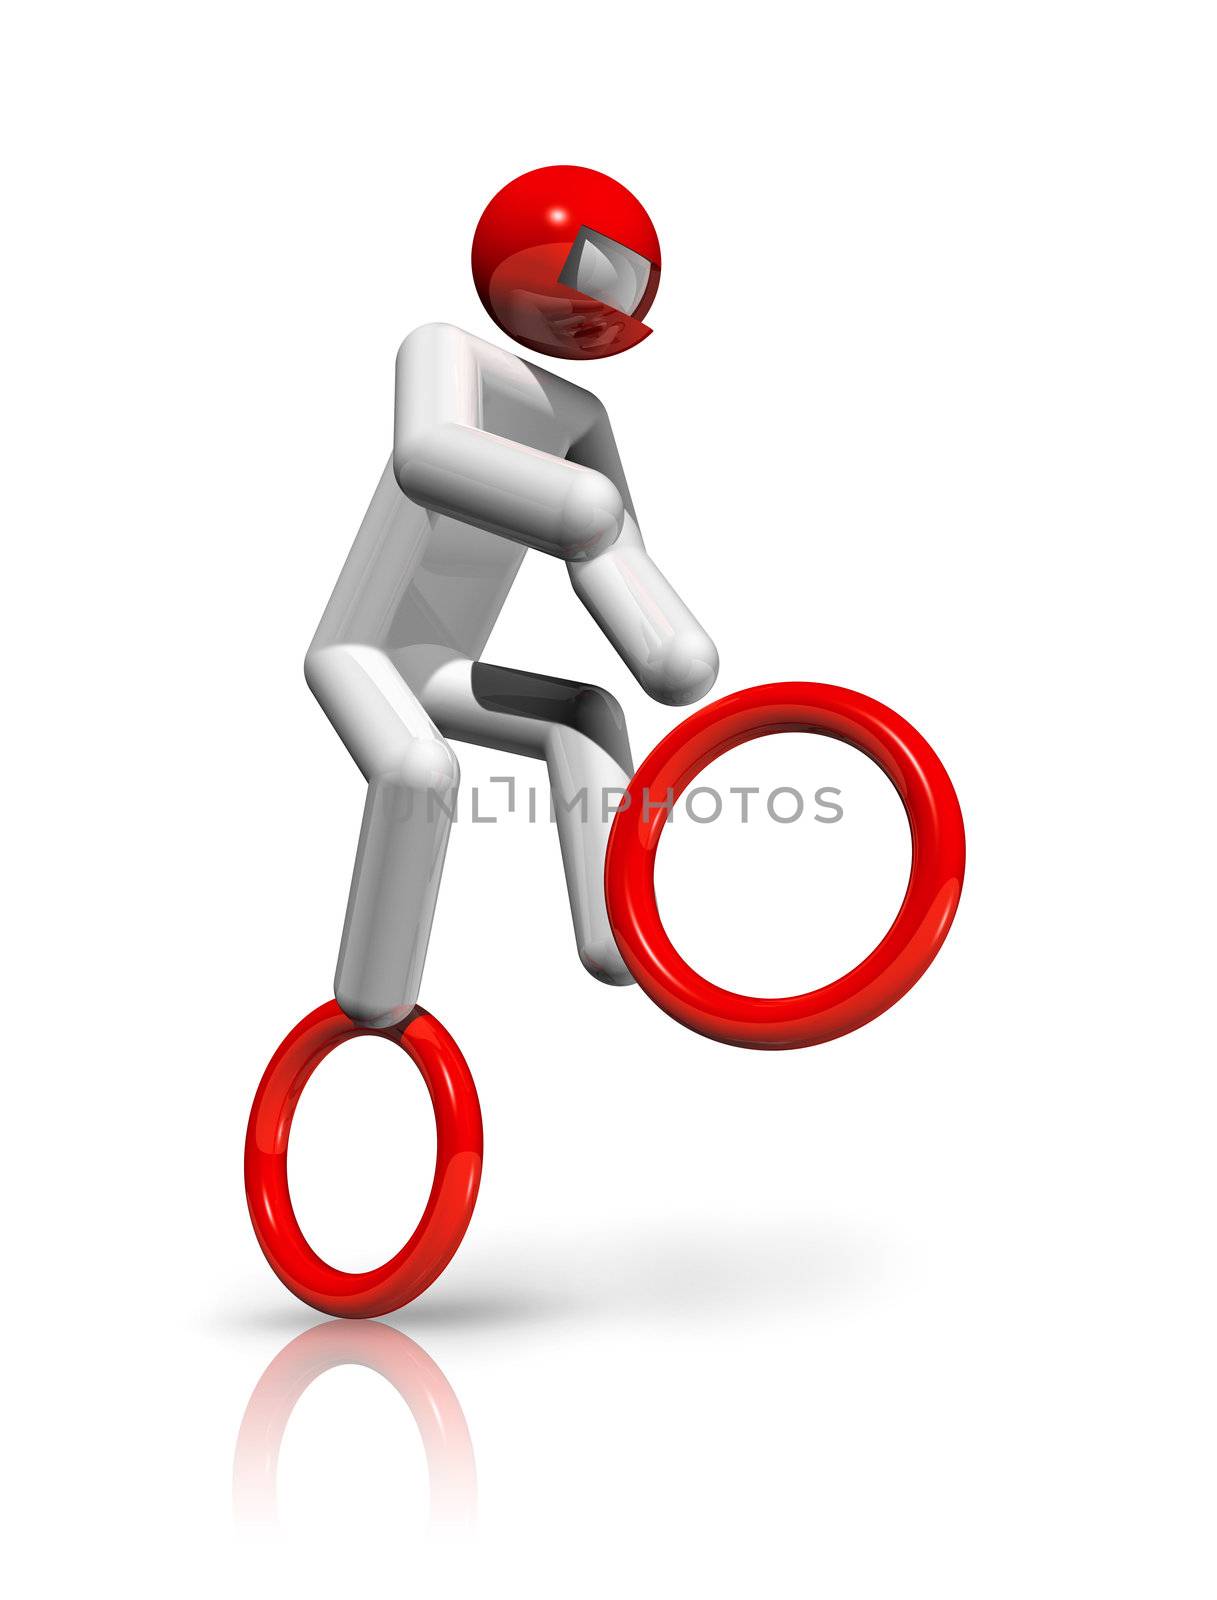 Cycling BMX 3D symbol by daboost